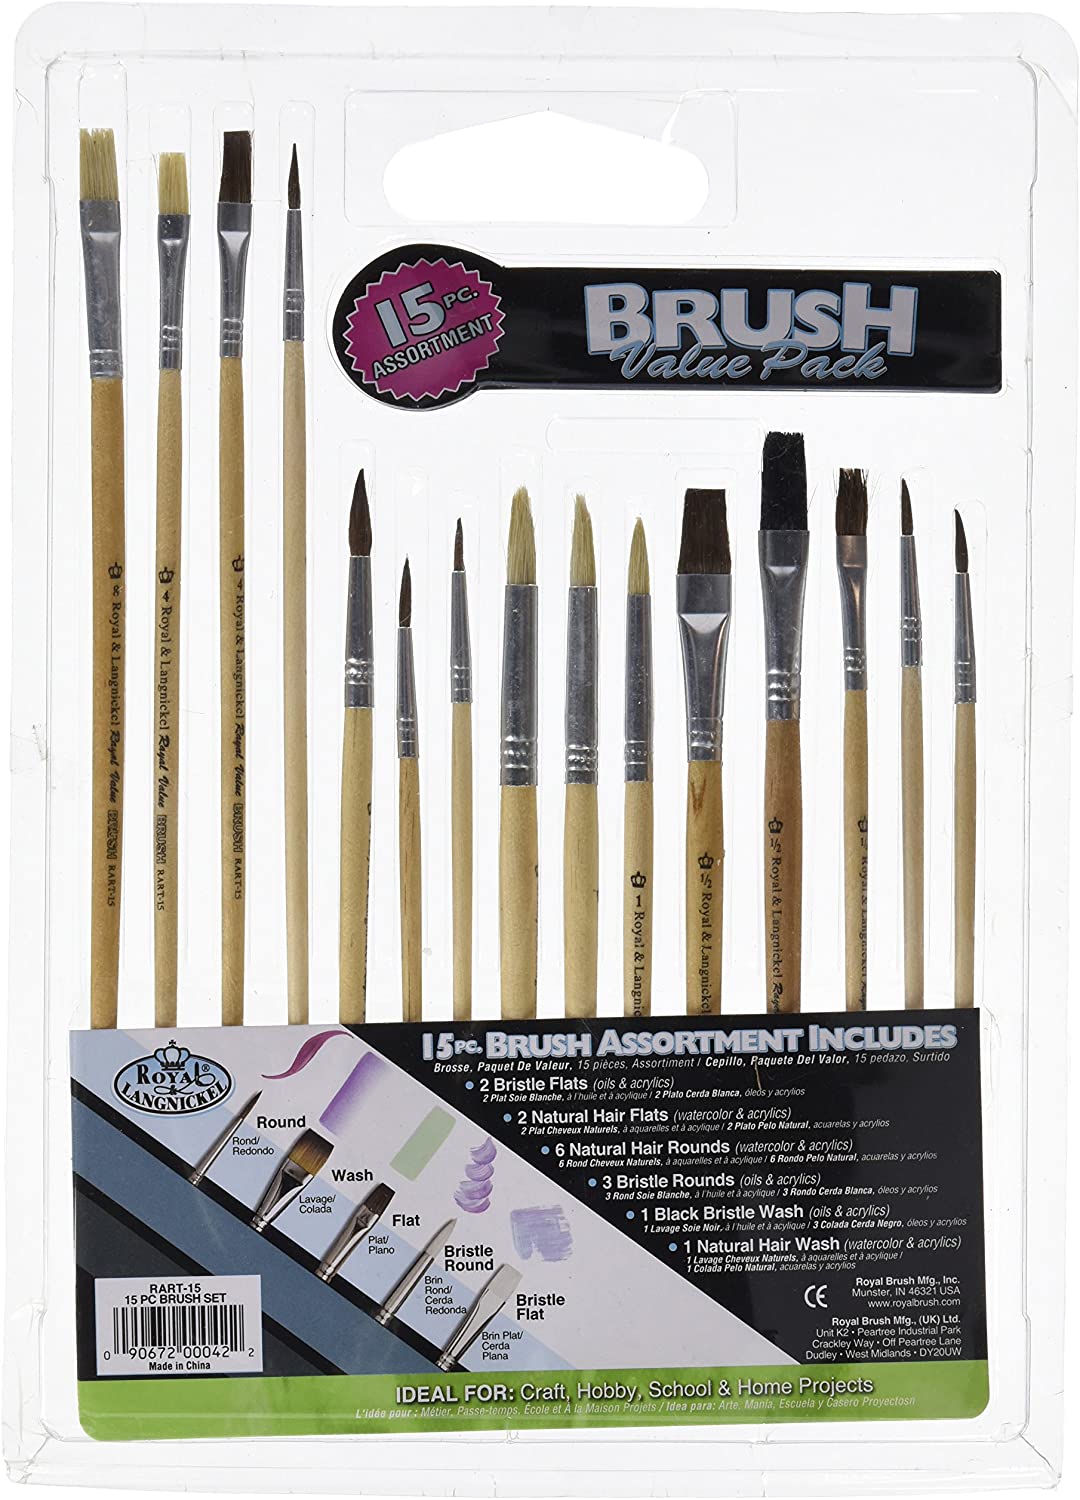 15 pc Assortment Brush Pack Wooden Handle